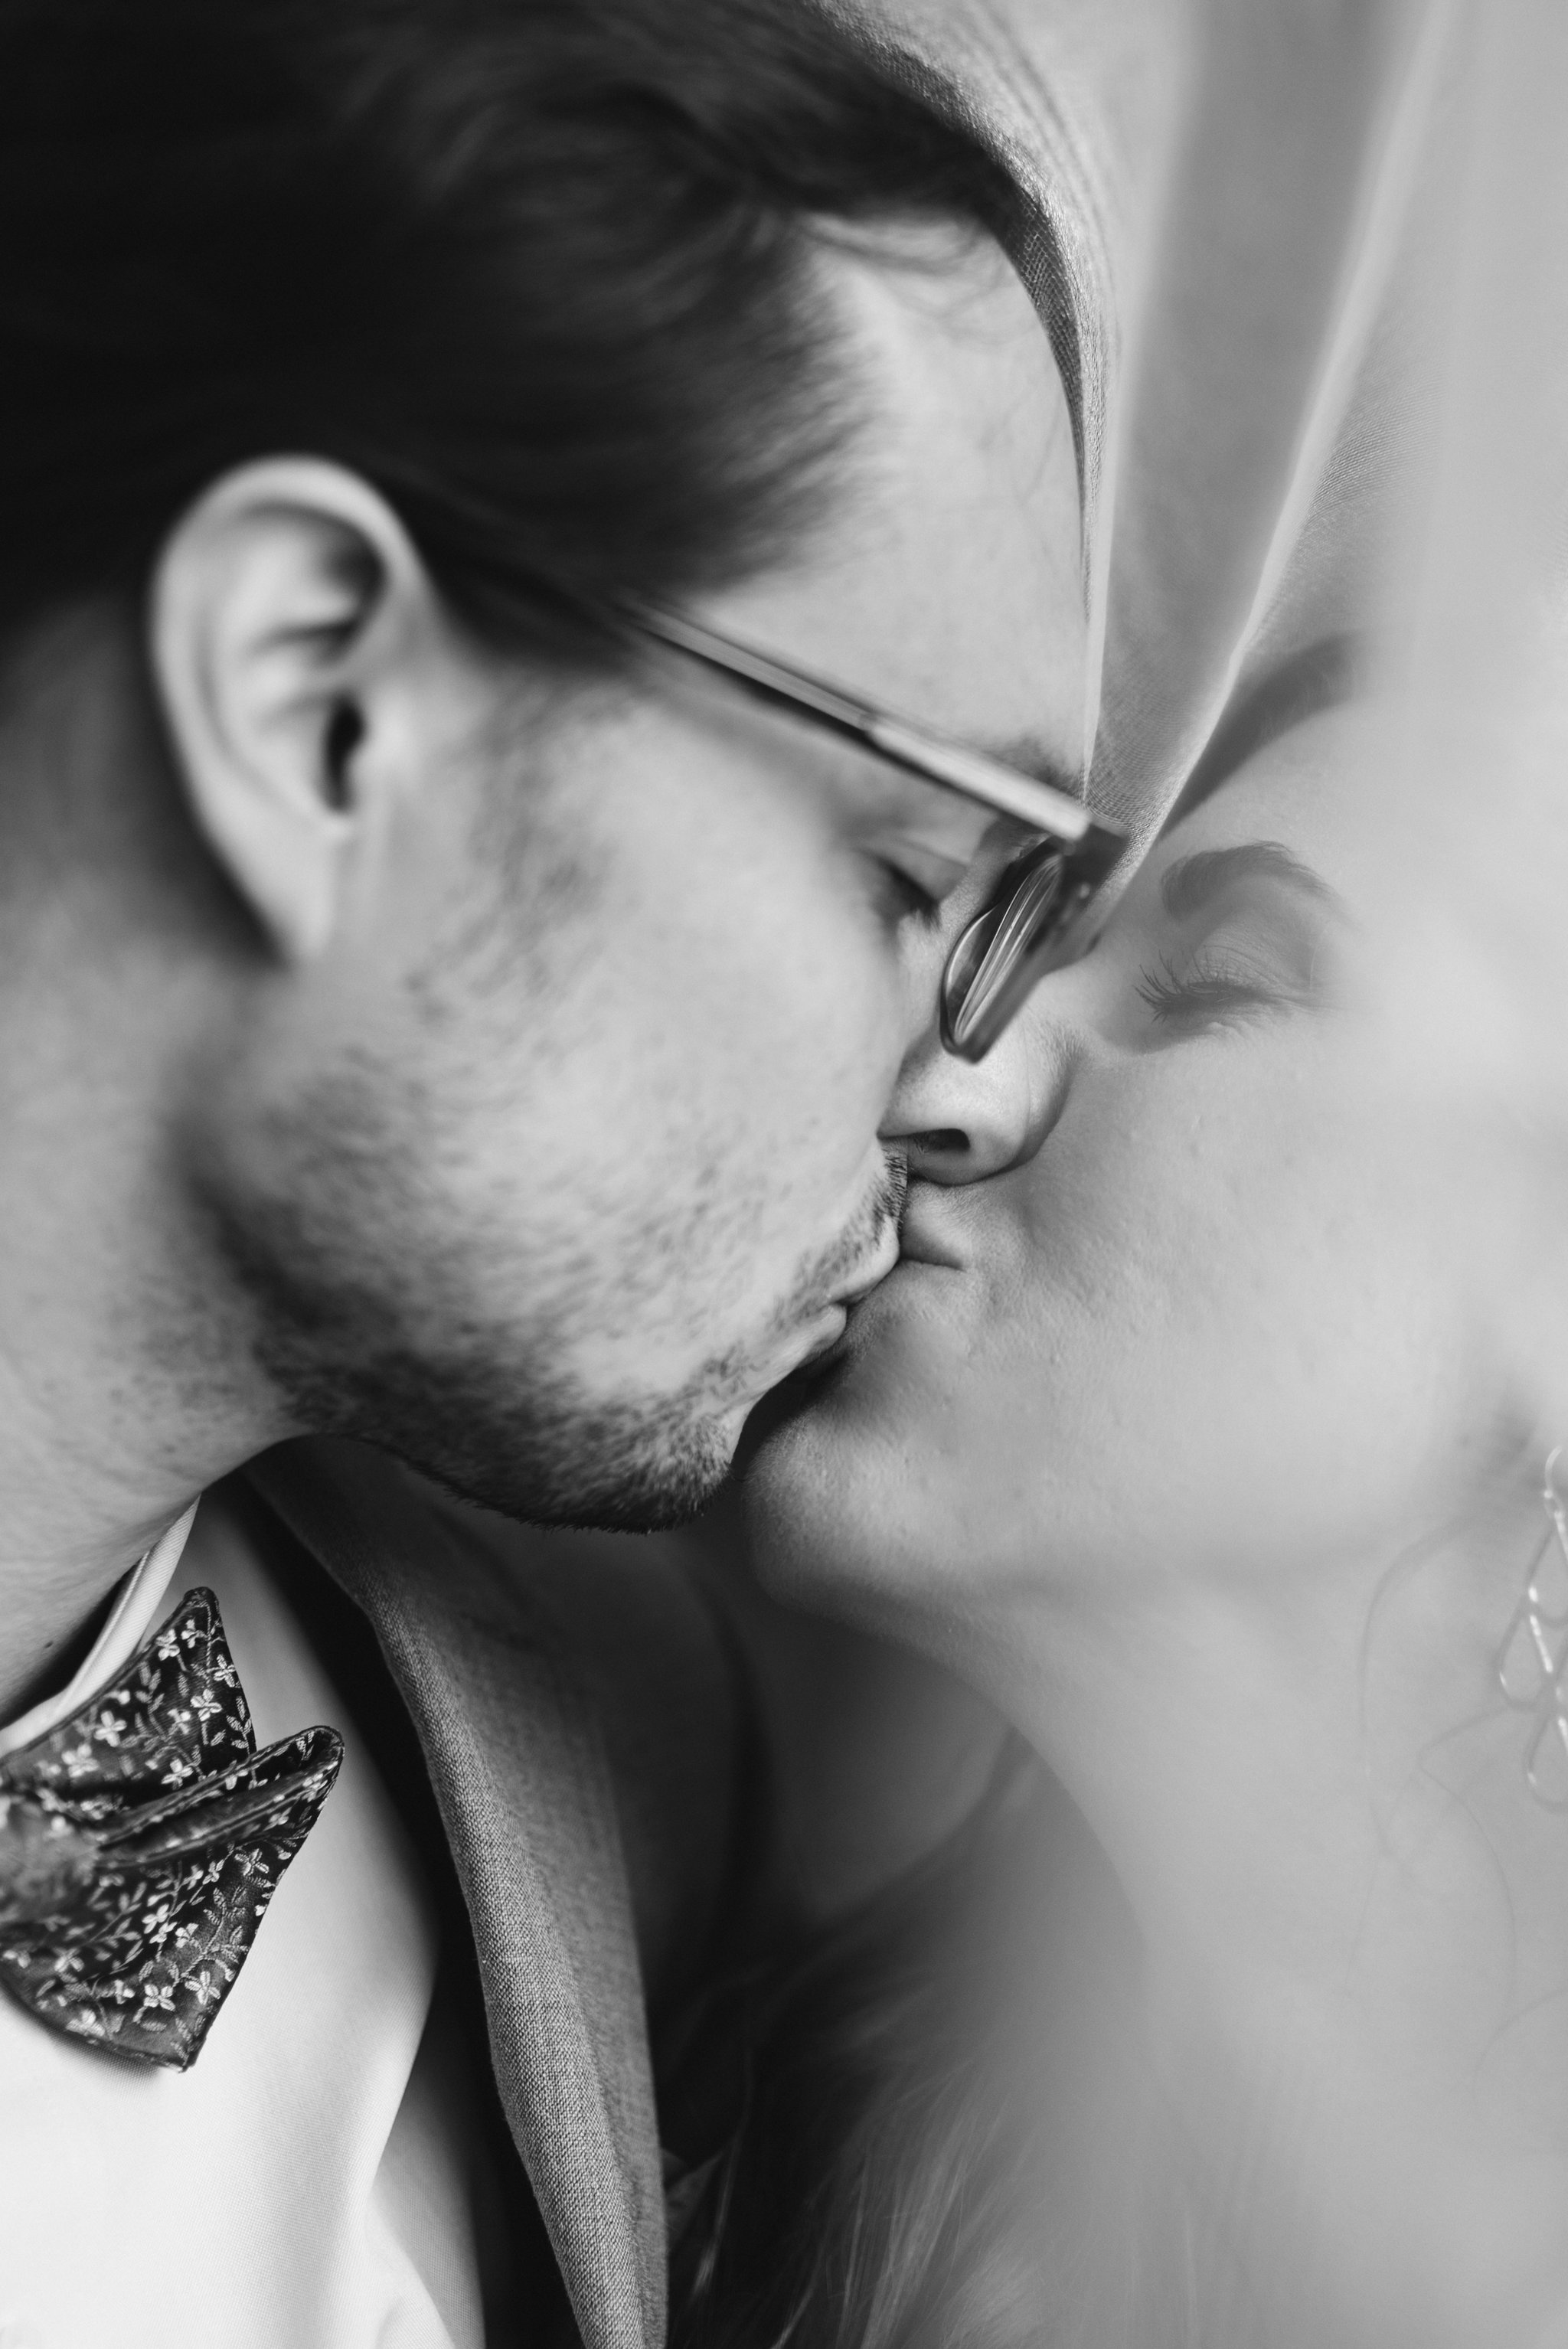  Annapolis, Quaker Wedding, Maryland Wedding Photographer, Intimate, Small Wedding, Vintage, DIY, Closeup of Bride and Groom Kissing, Black and White Photo 